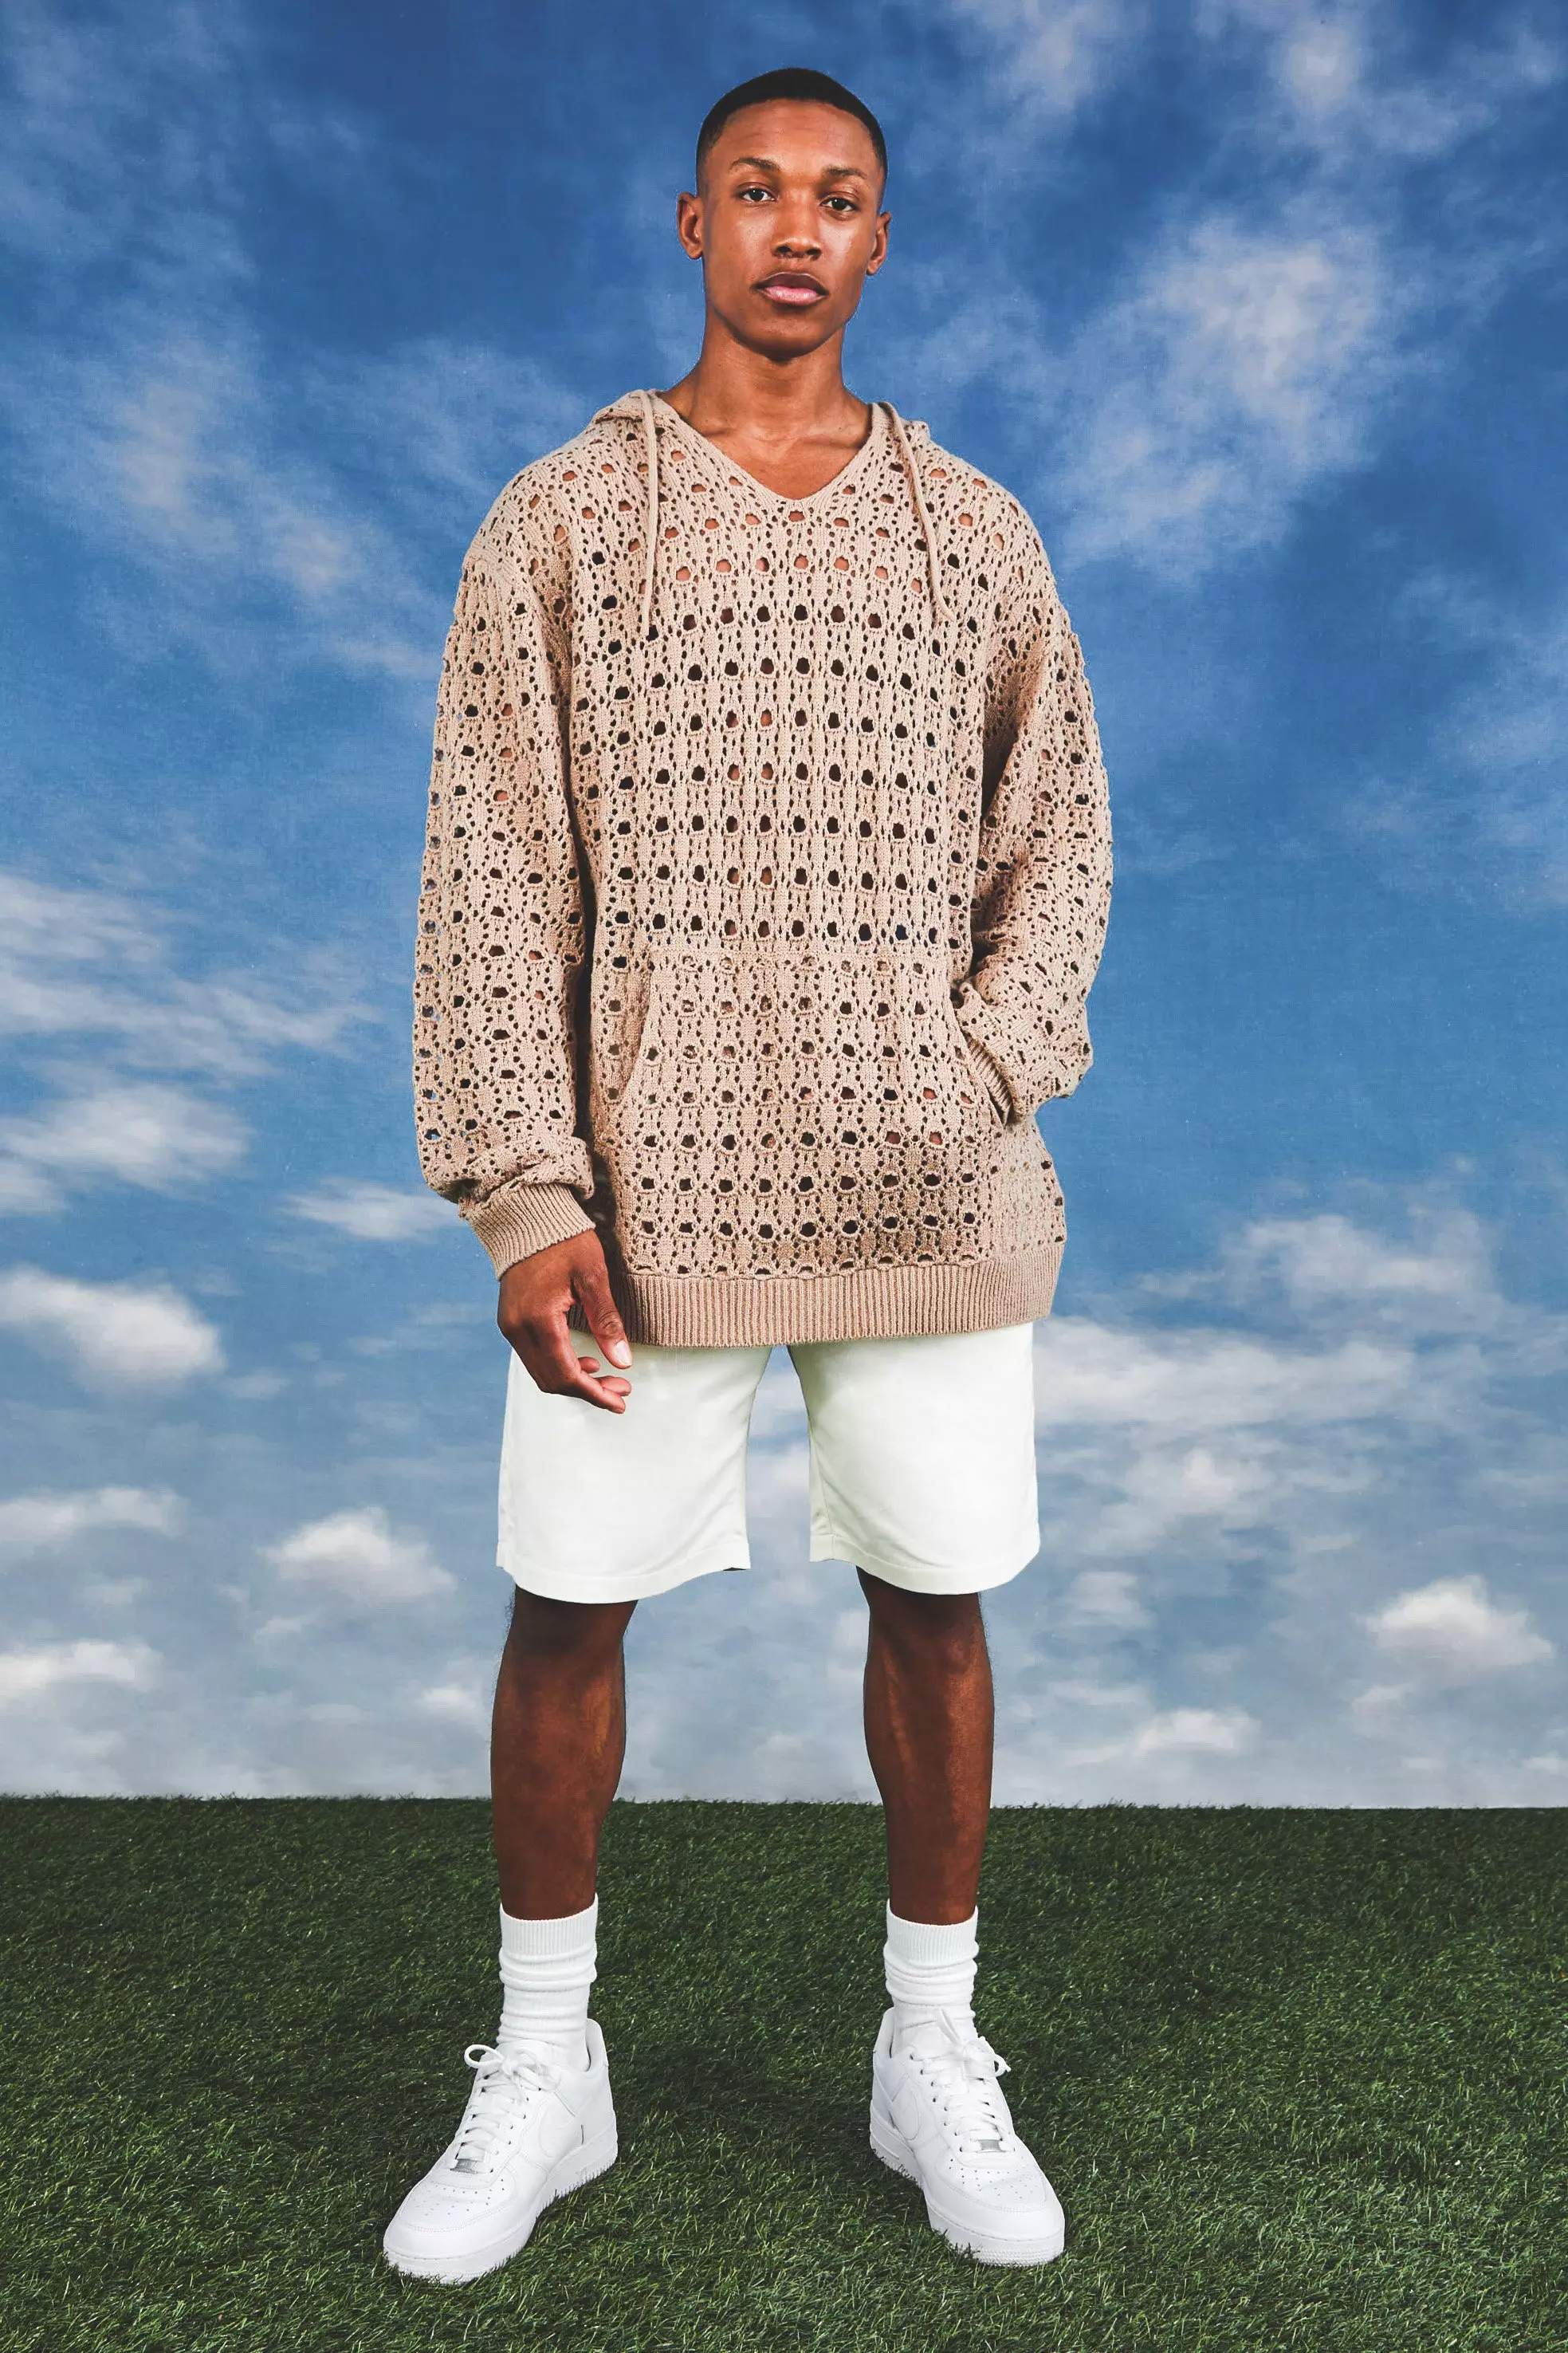 V-neck Hoodie Sweater - White